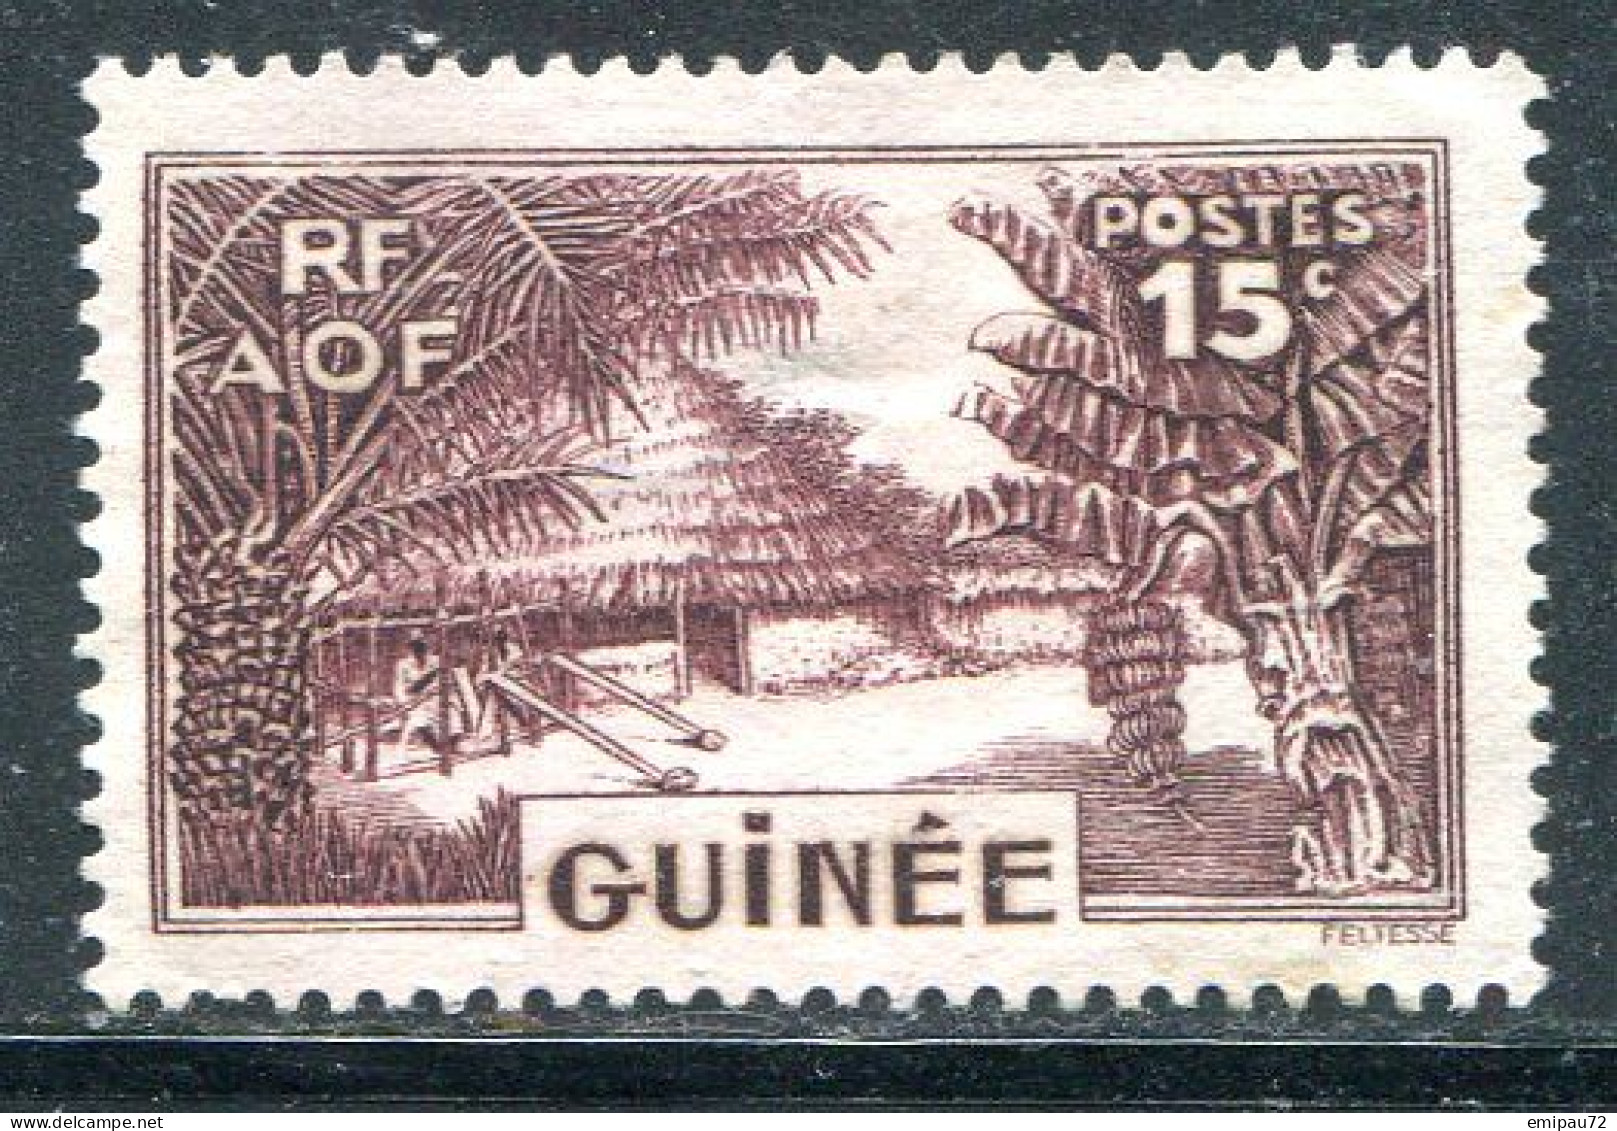 GUINEE- Y&T N°130- Oblitéré - Usados